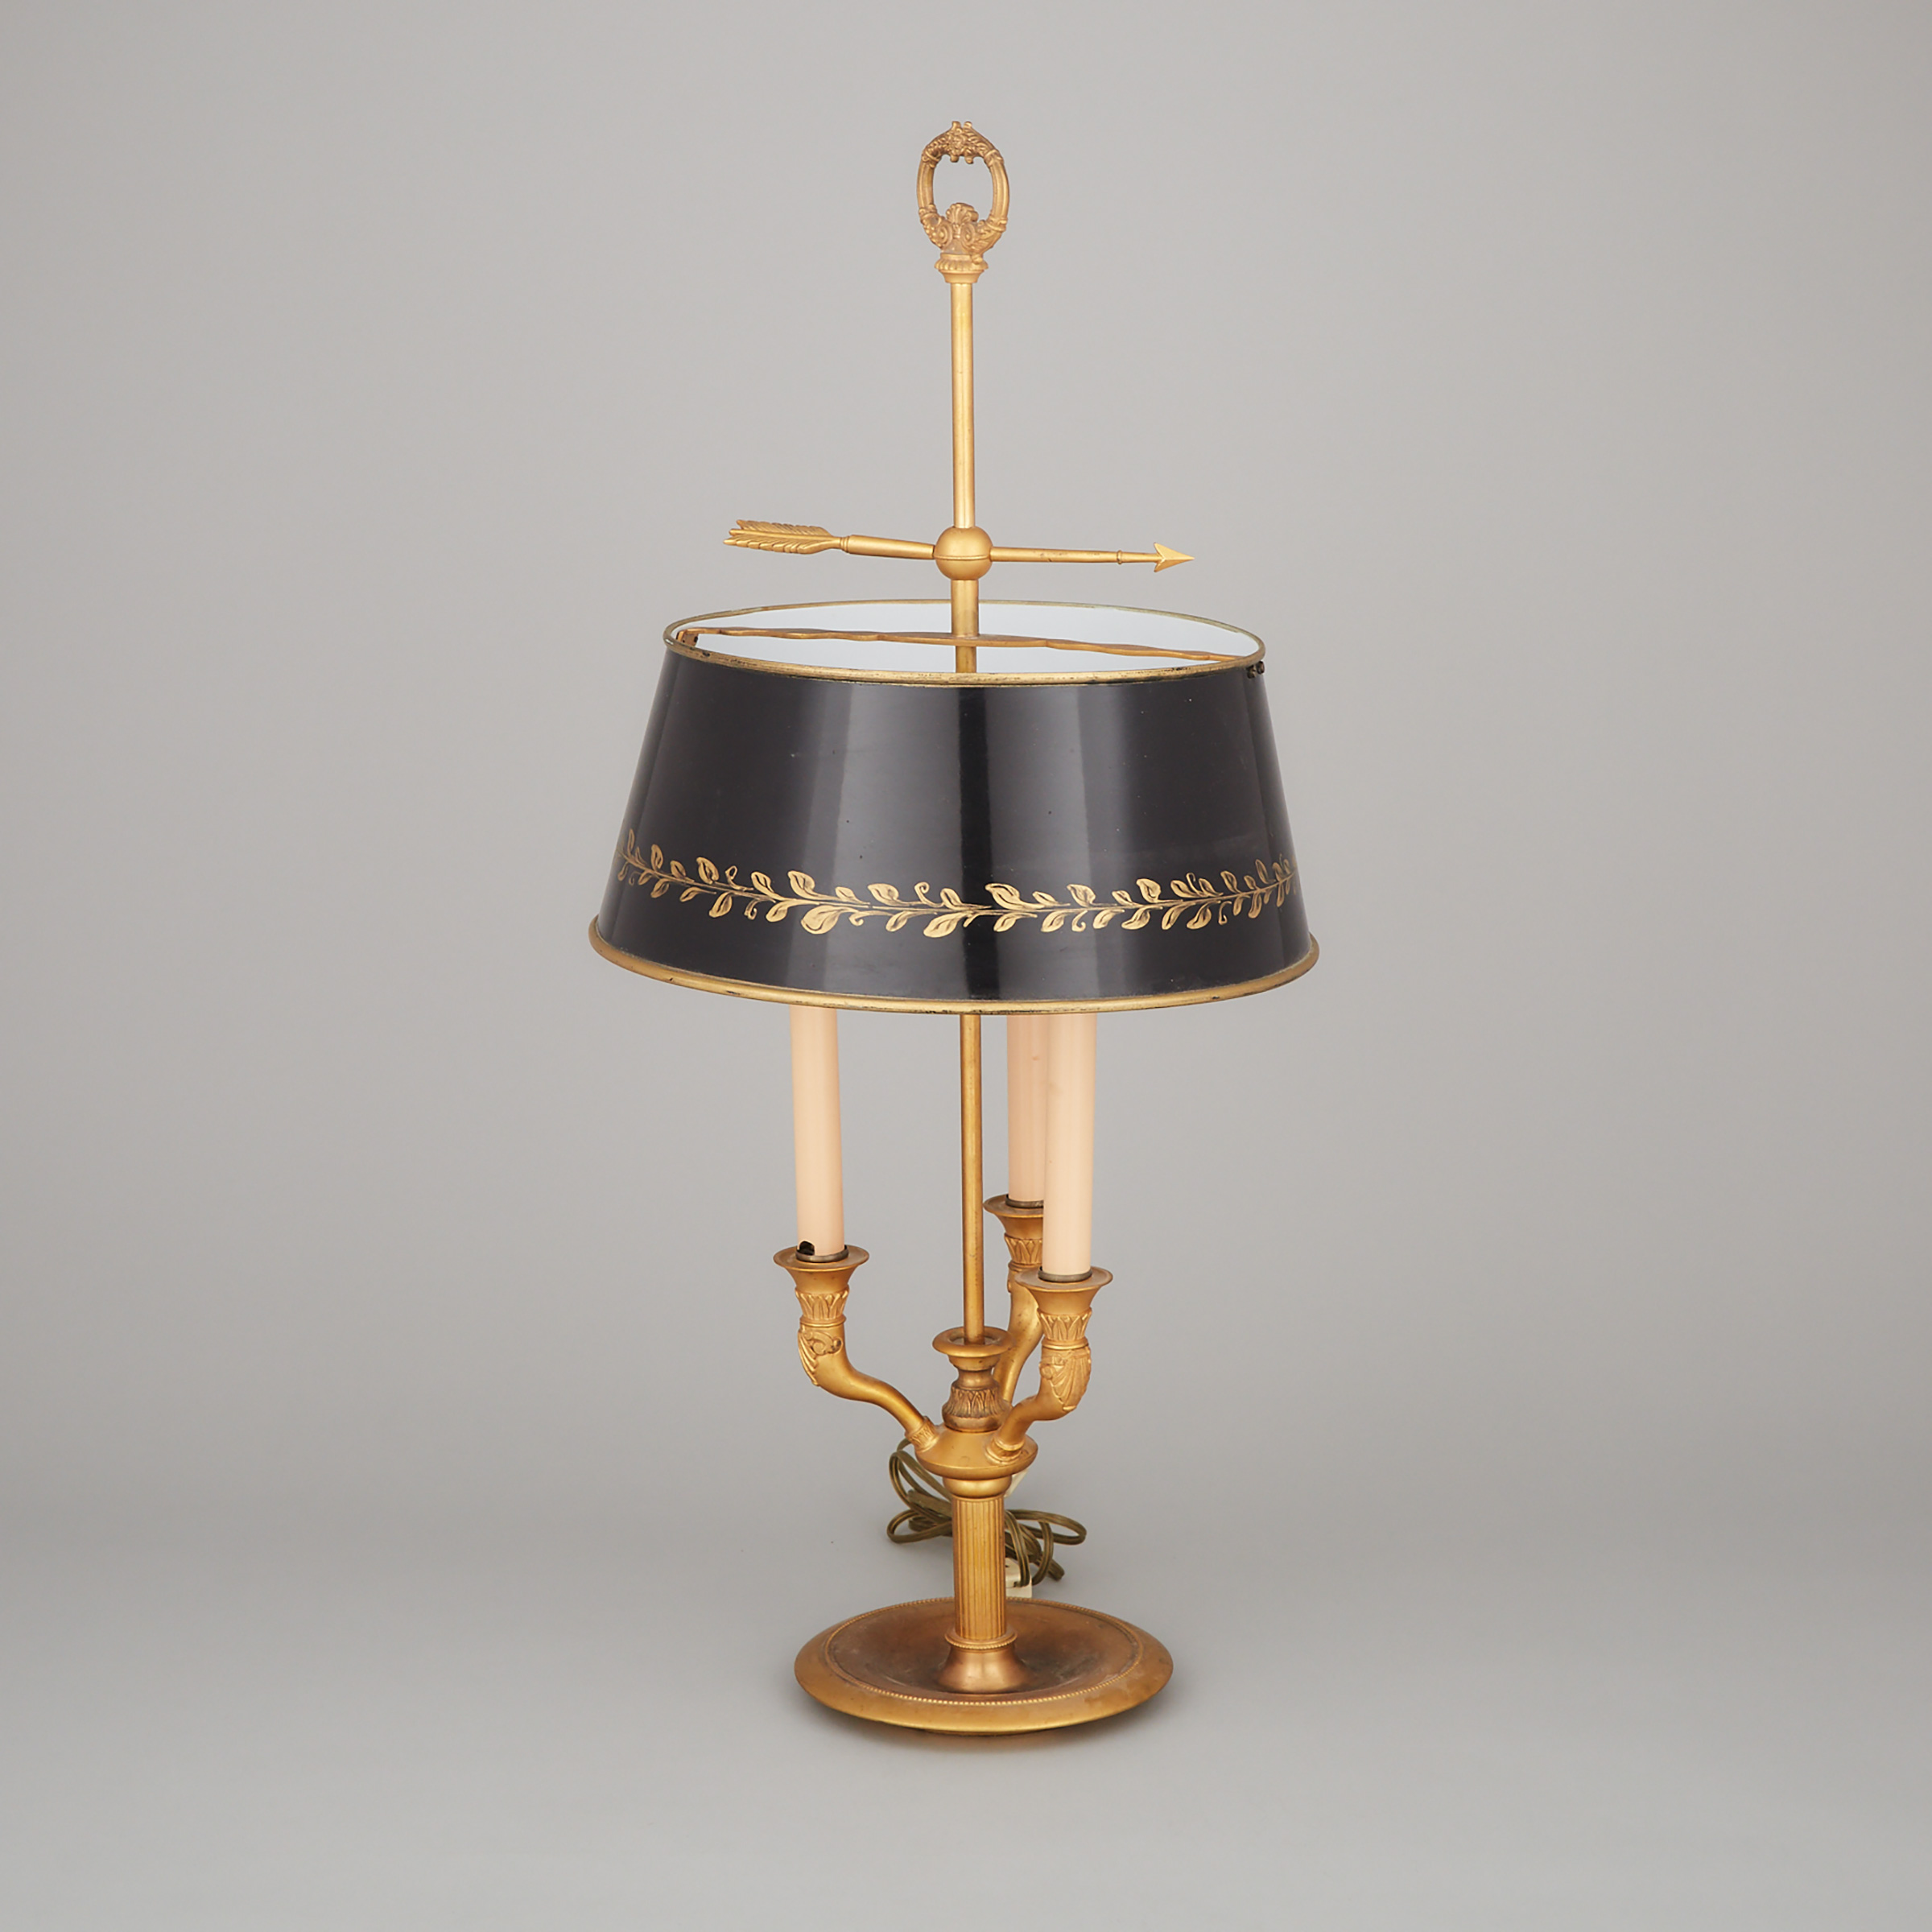 French Empire Style Gilt Bronze Bouilotte Lamp, 20th century